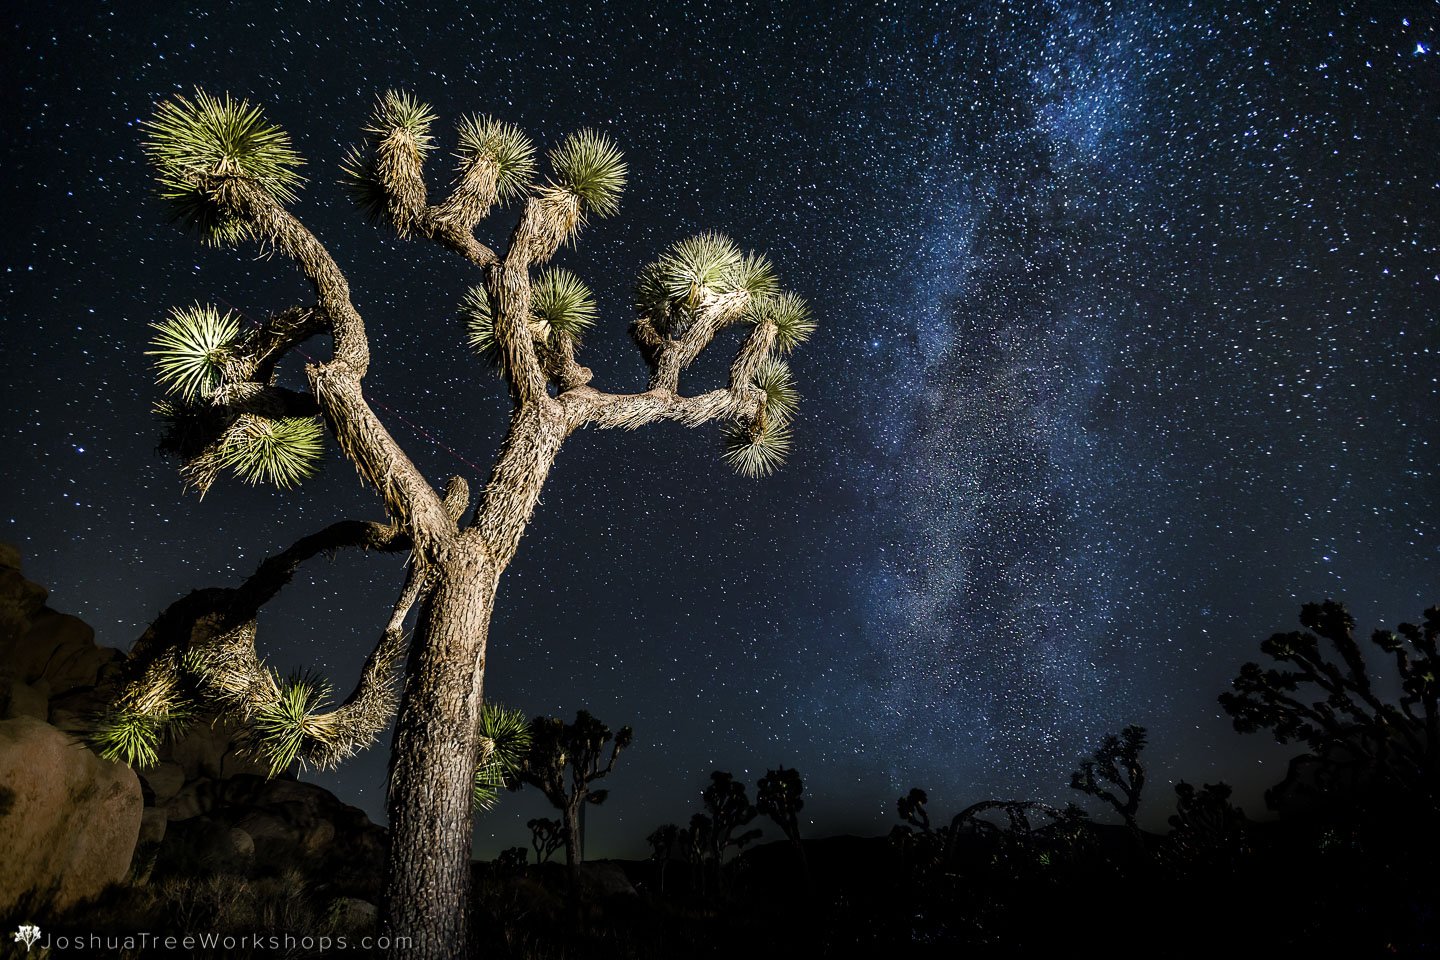 Stargazing Guide to Finding the Milky Way in Joshua Tree — Visit Joshua Tree